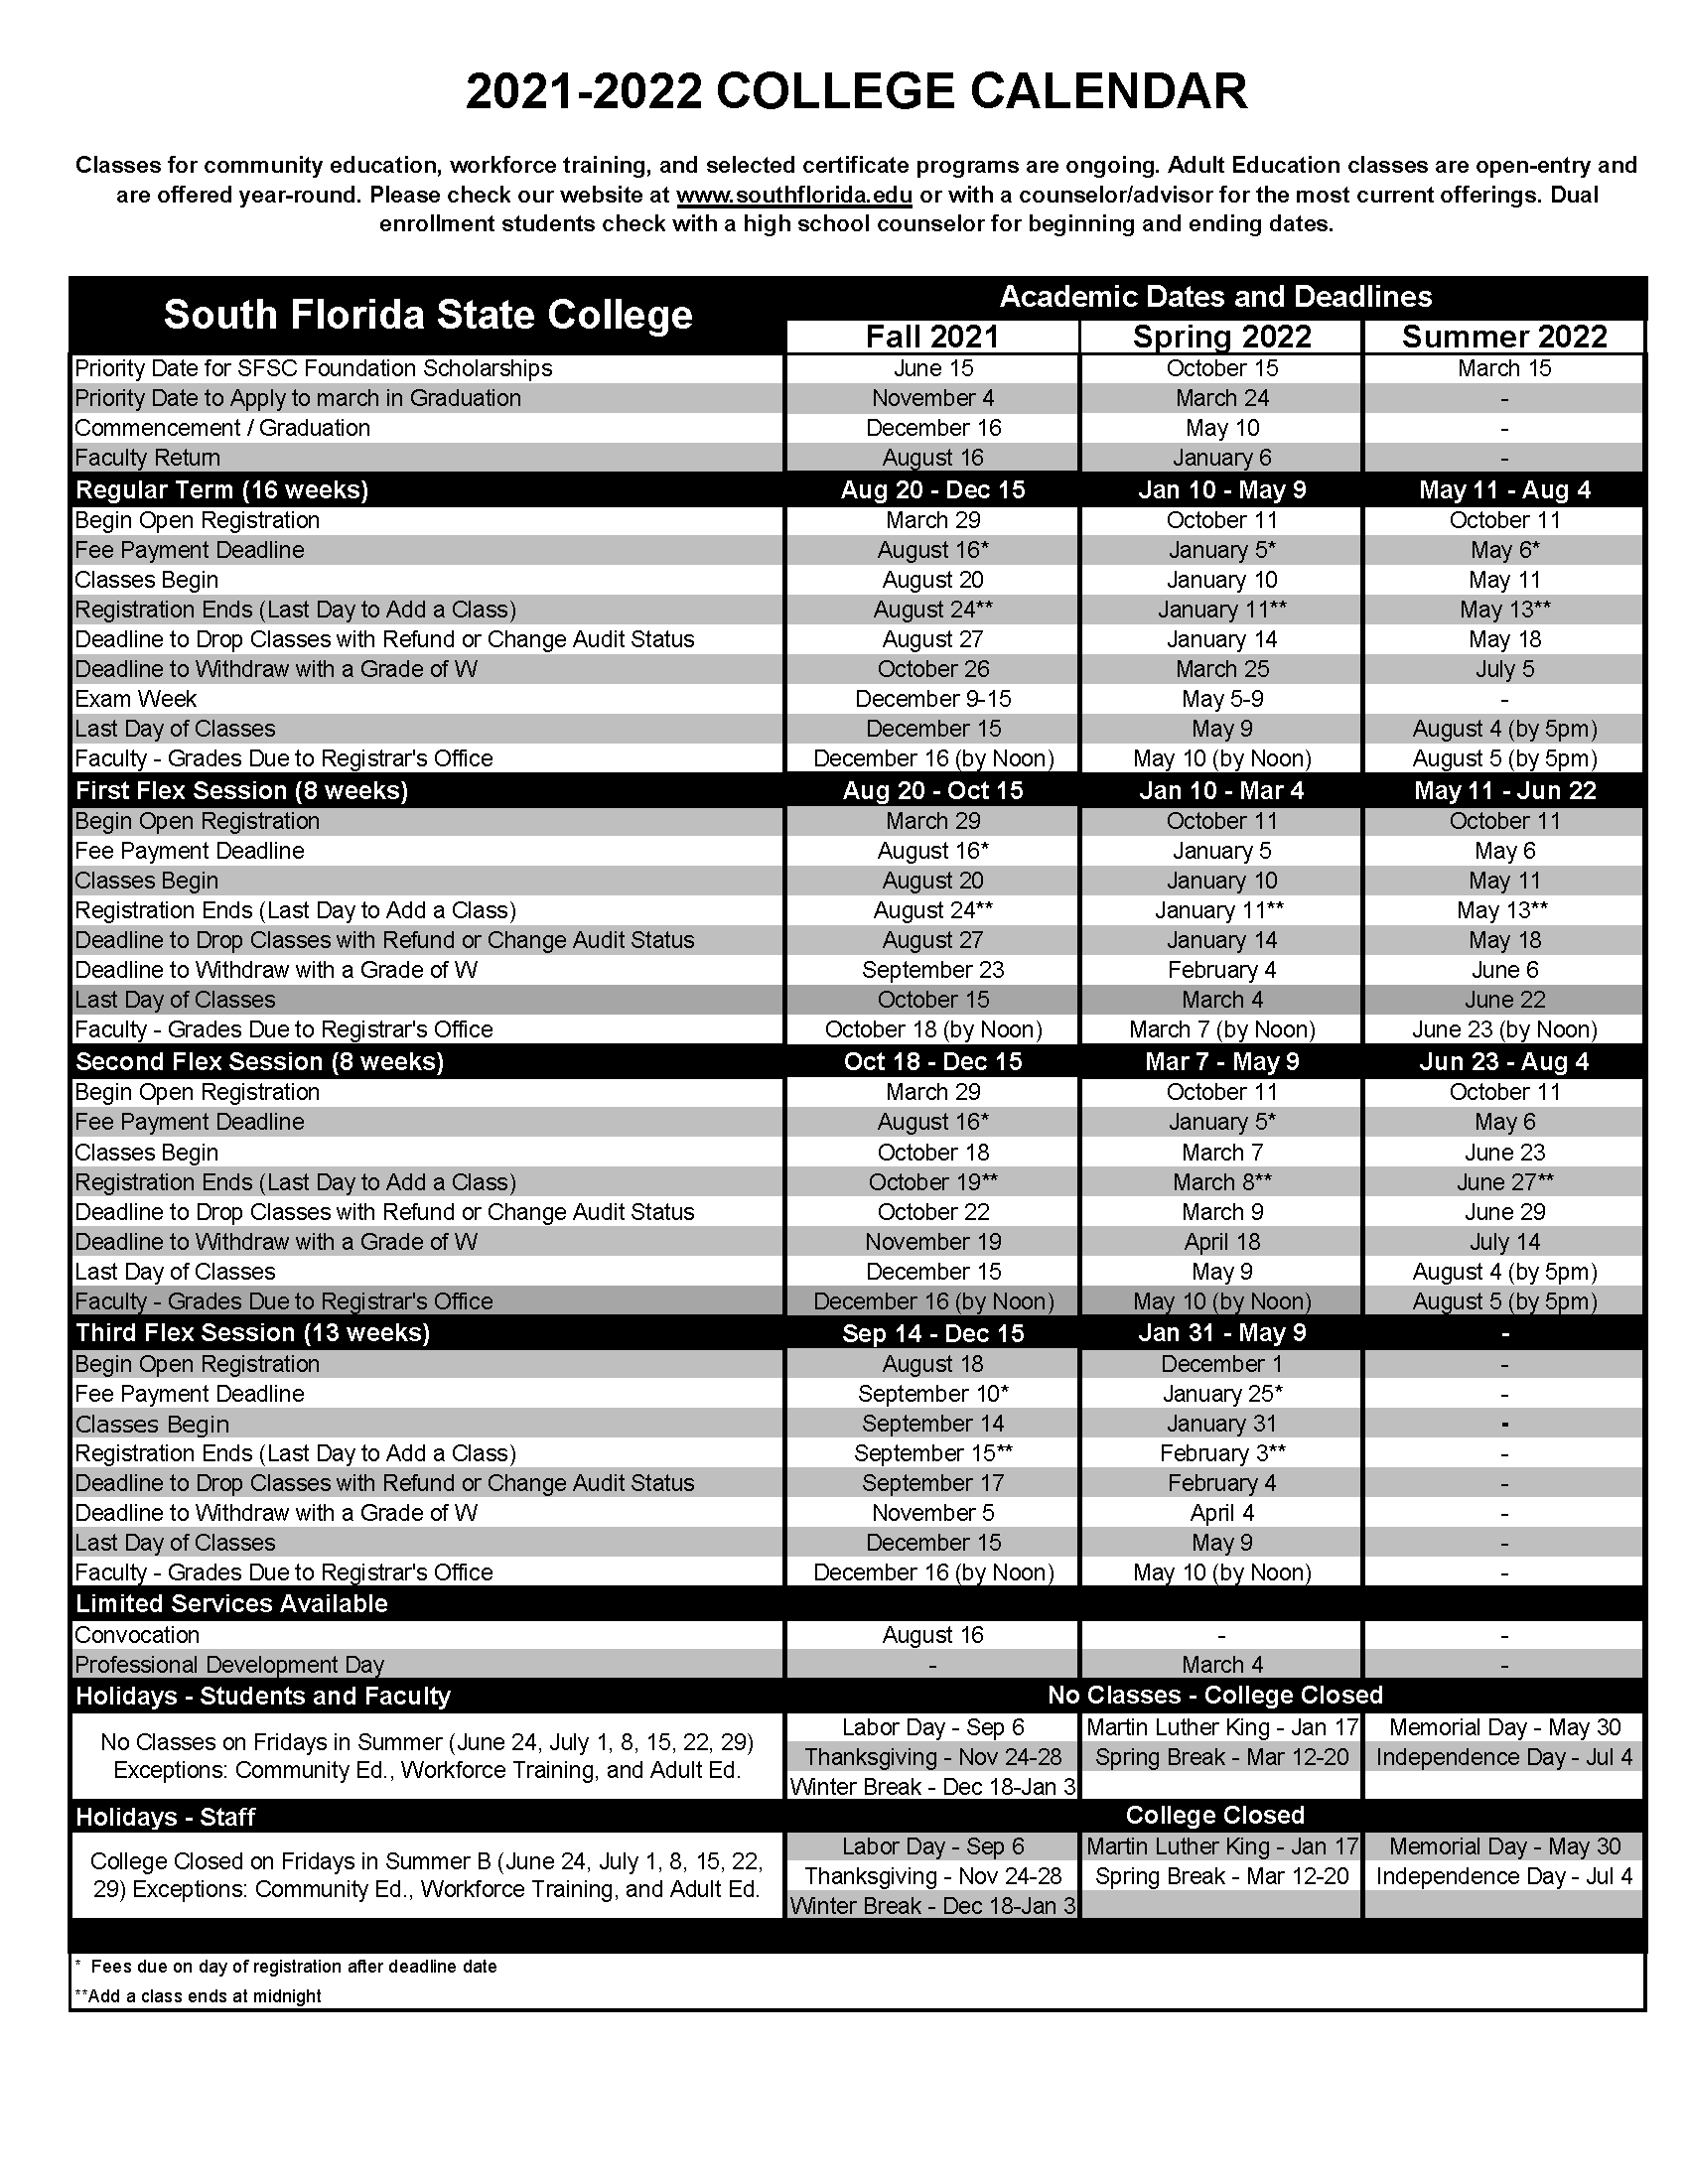 Seminole State College Calendar 2022 Academic Calendar 2021-2022 - College